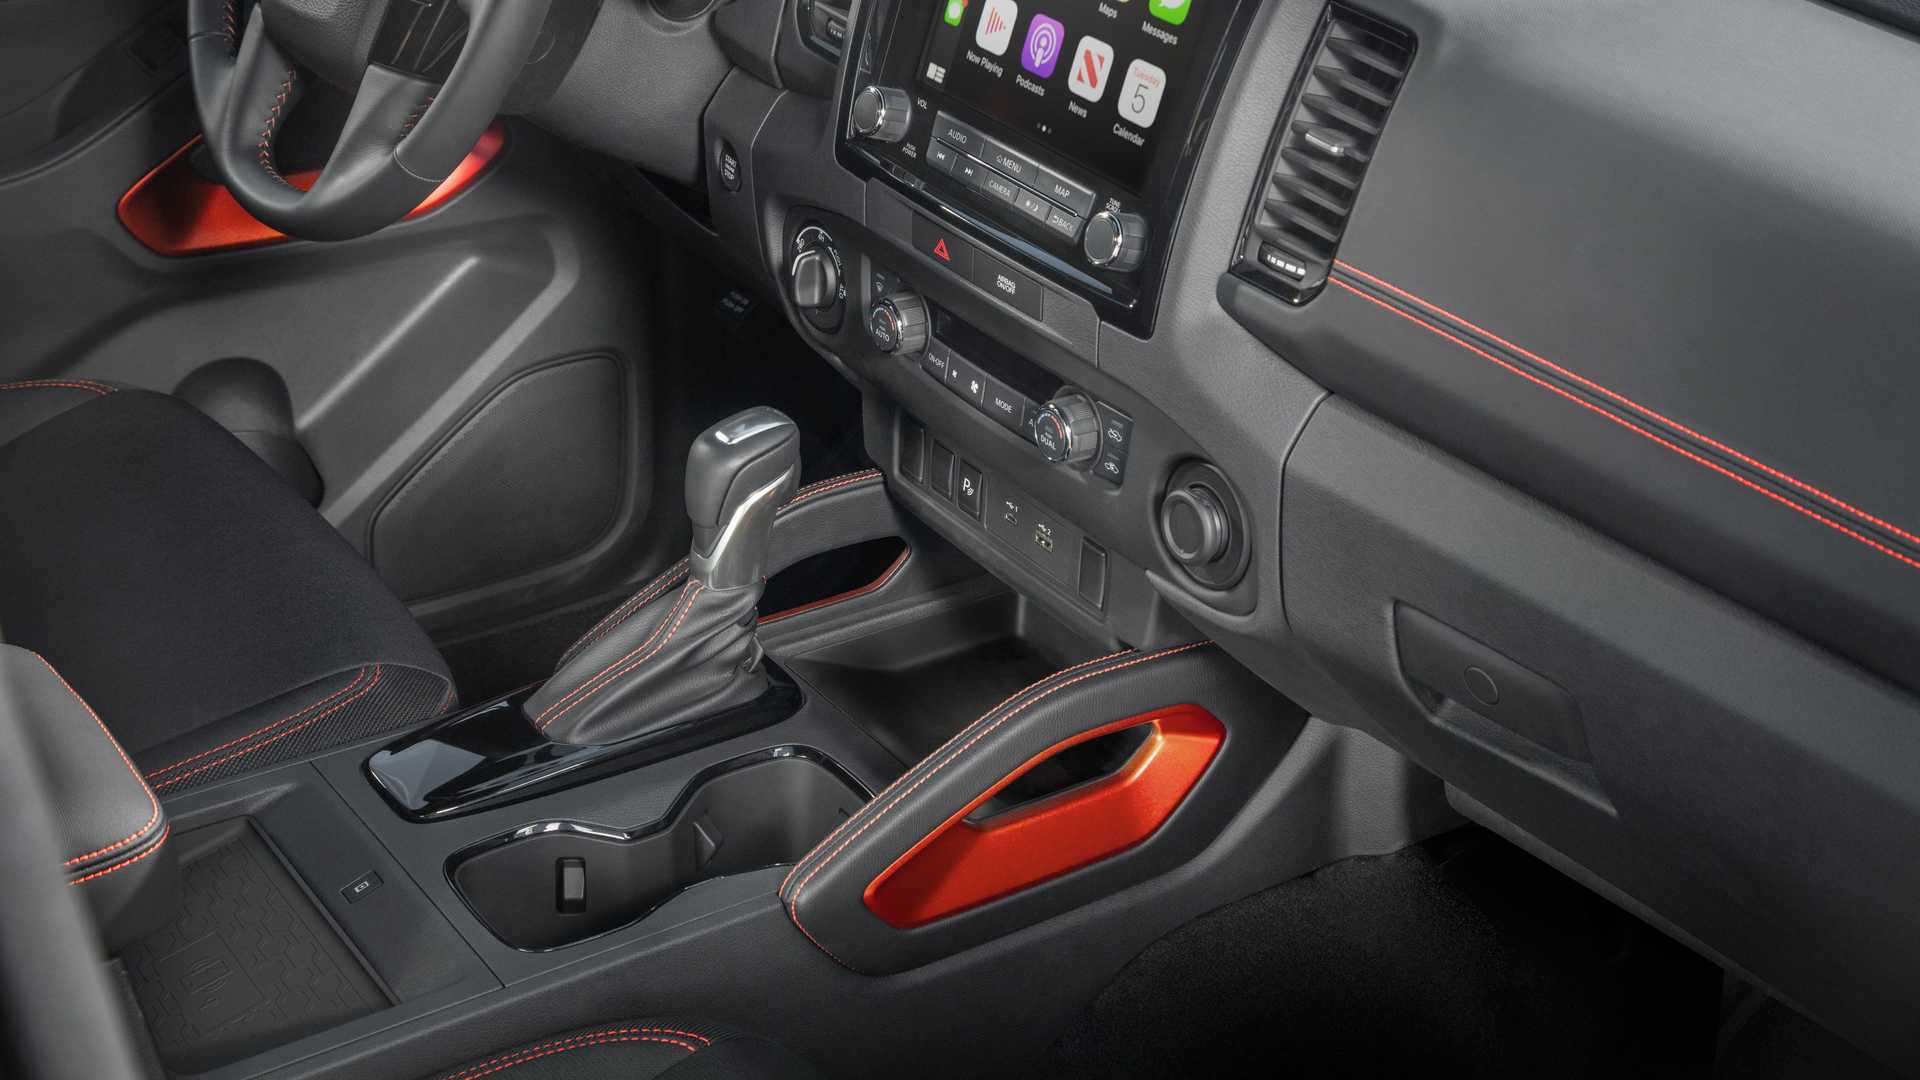 Ra mắt Nissan Frontier 2022, đối thủ Toyota Tacoma, Ford Ranger tại Mỹ 2022-nissan-frontier-interior-dashboard-details-1.jpg